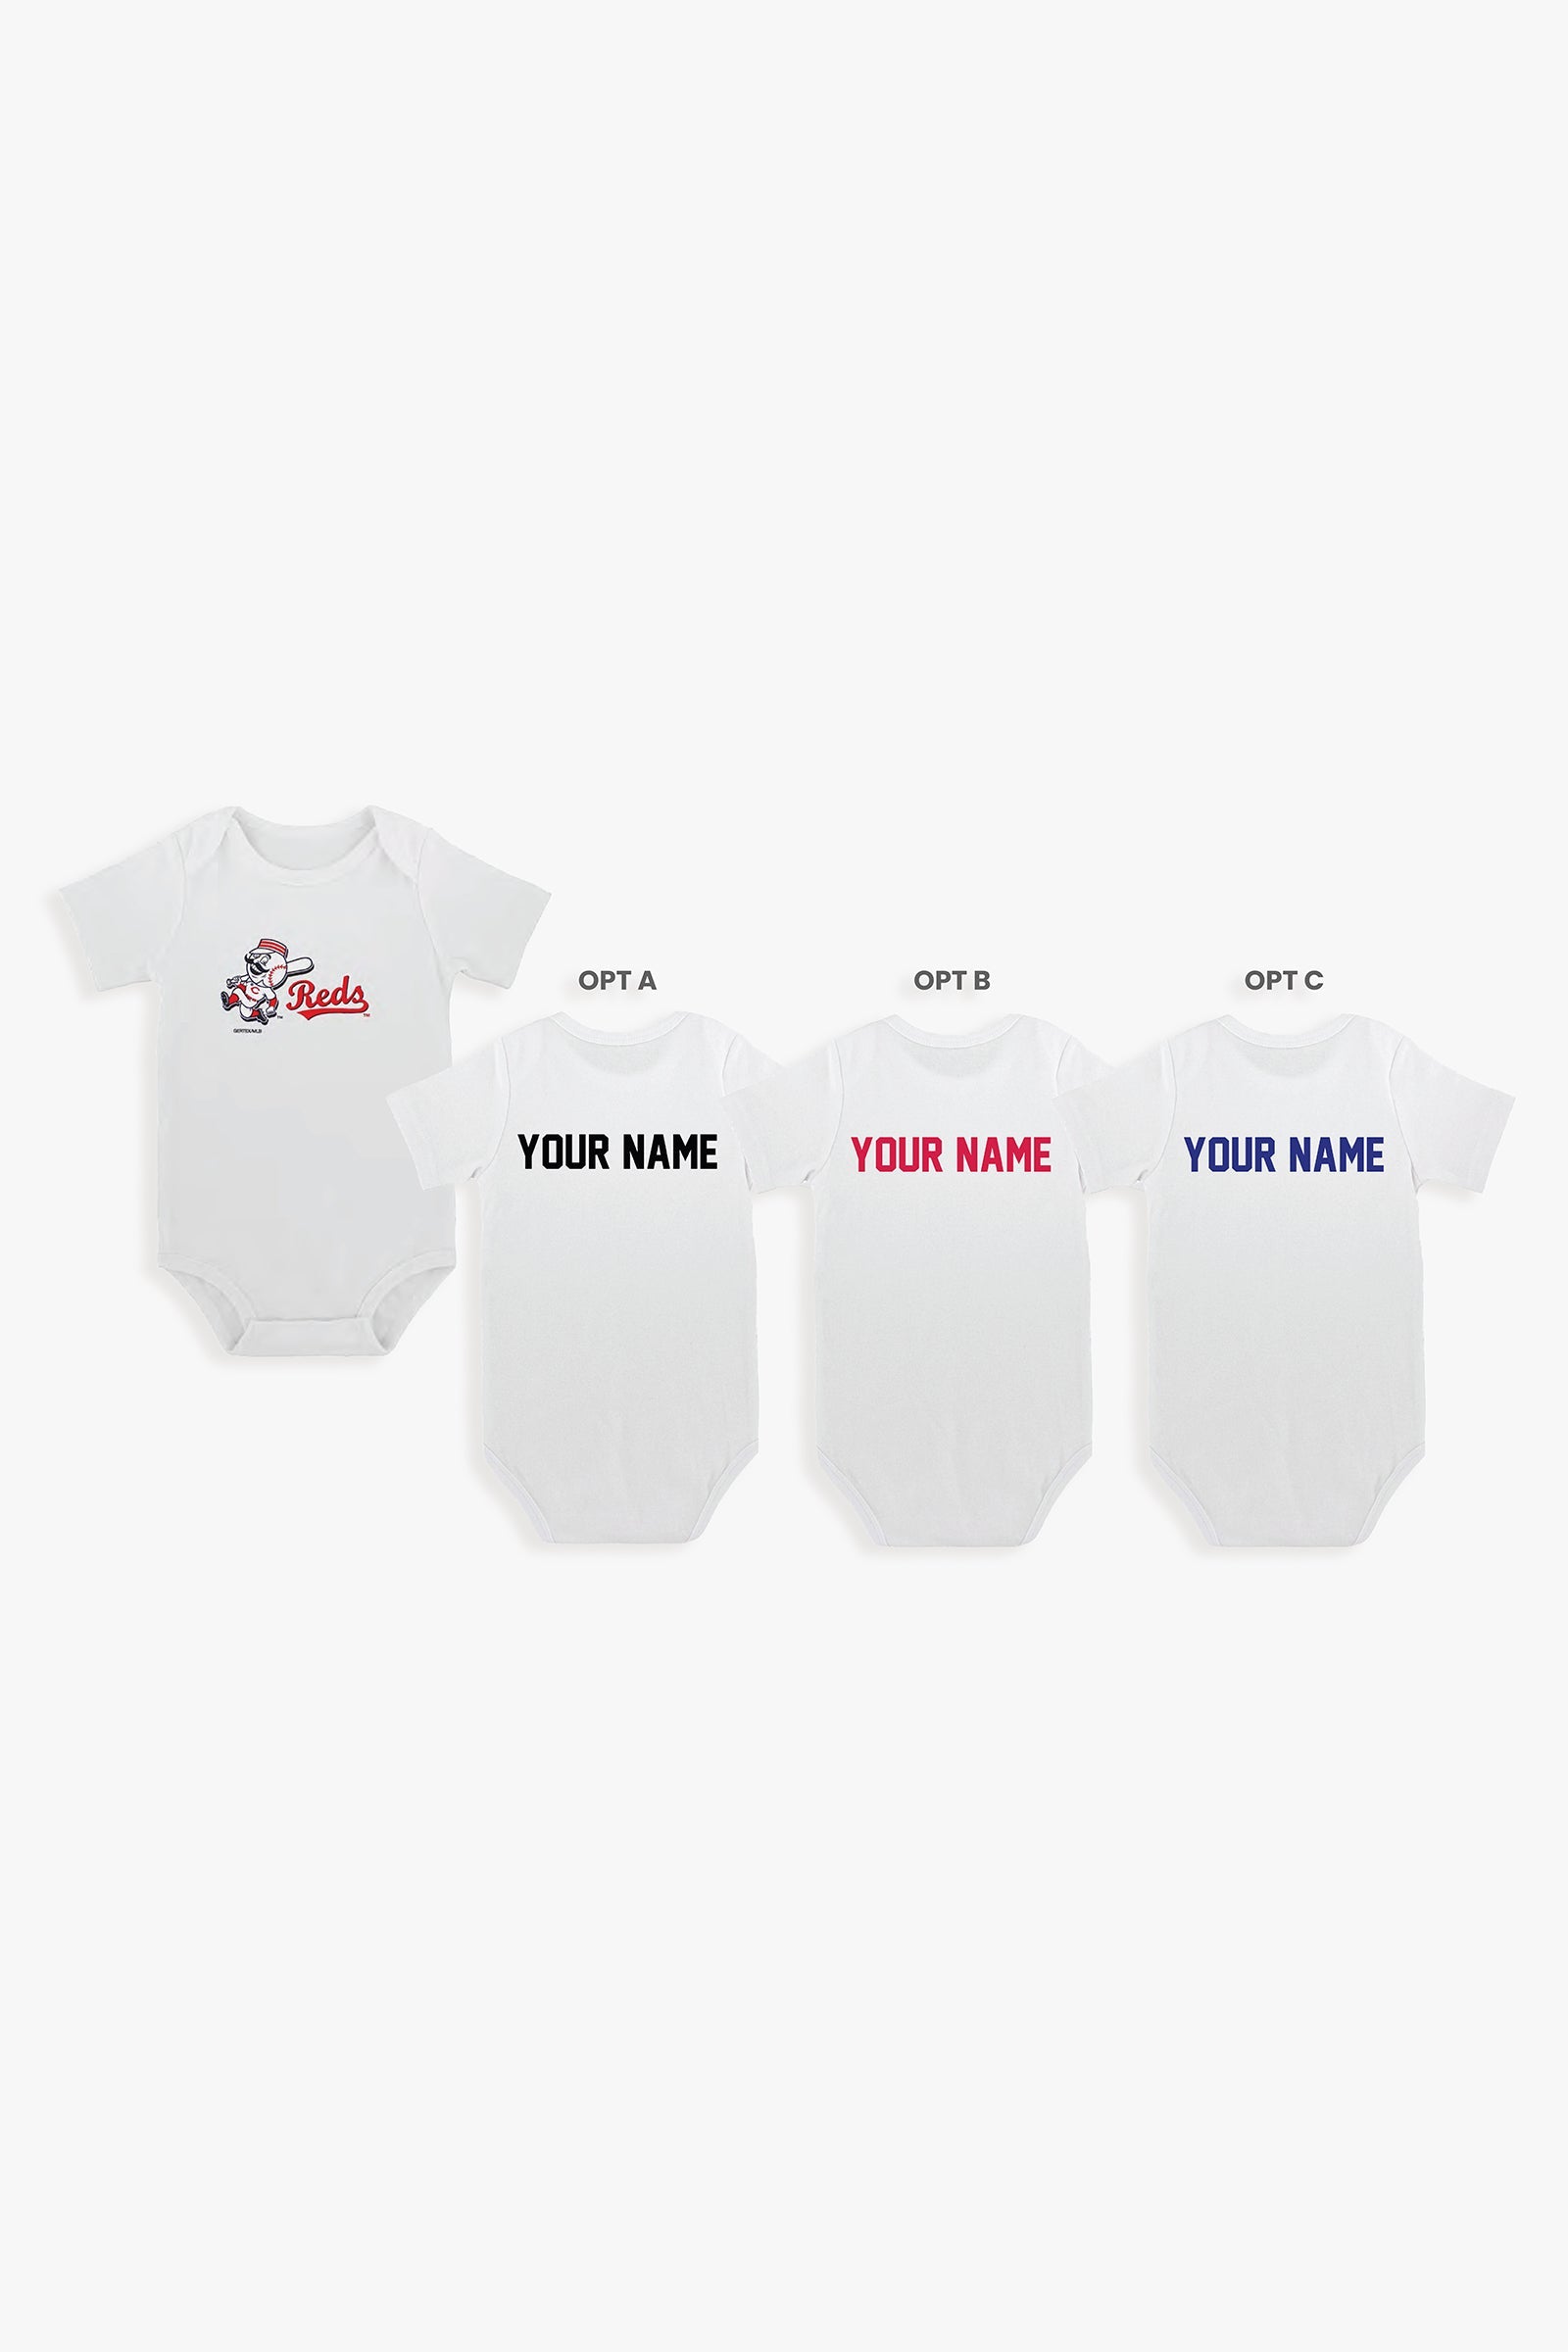 Gertex Customizable MLB Baby Bodysuit in White (18-24 Months)